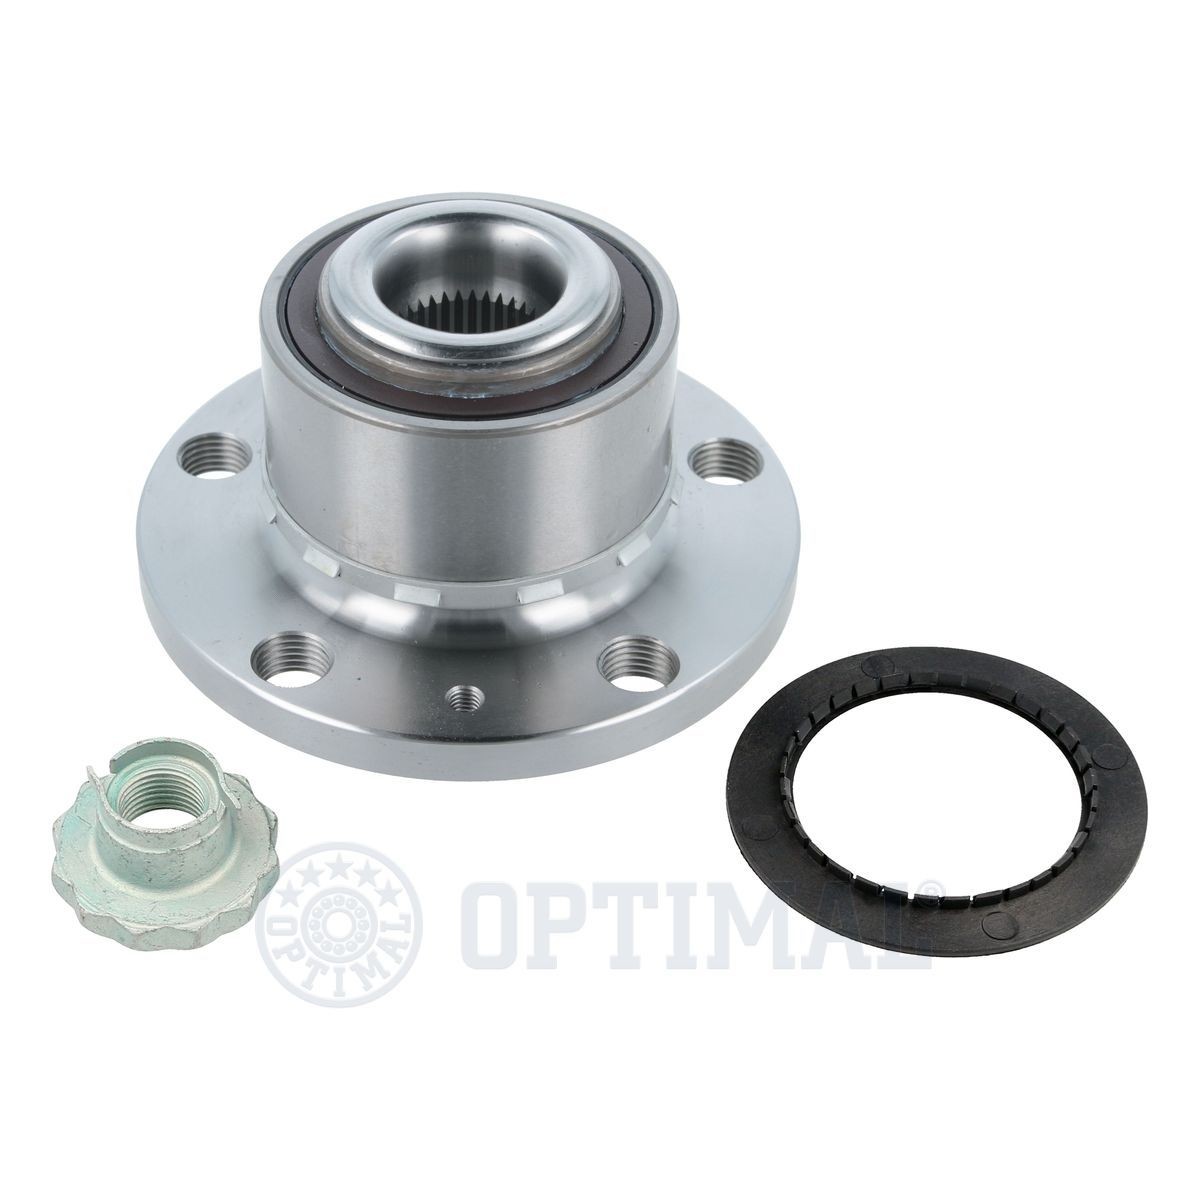 OPTIMAL 101109 Wheel bearing kit with integrated magnetic sensor ring, 120 mm